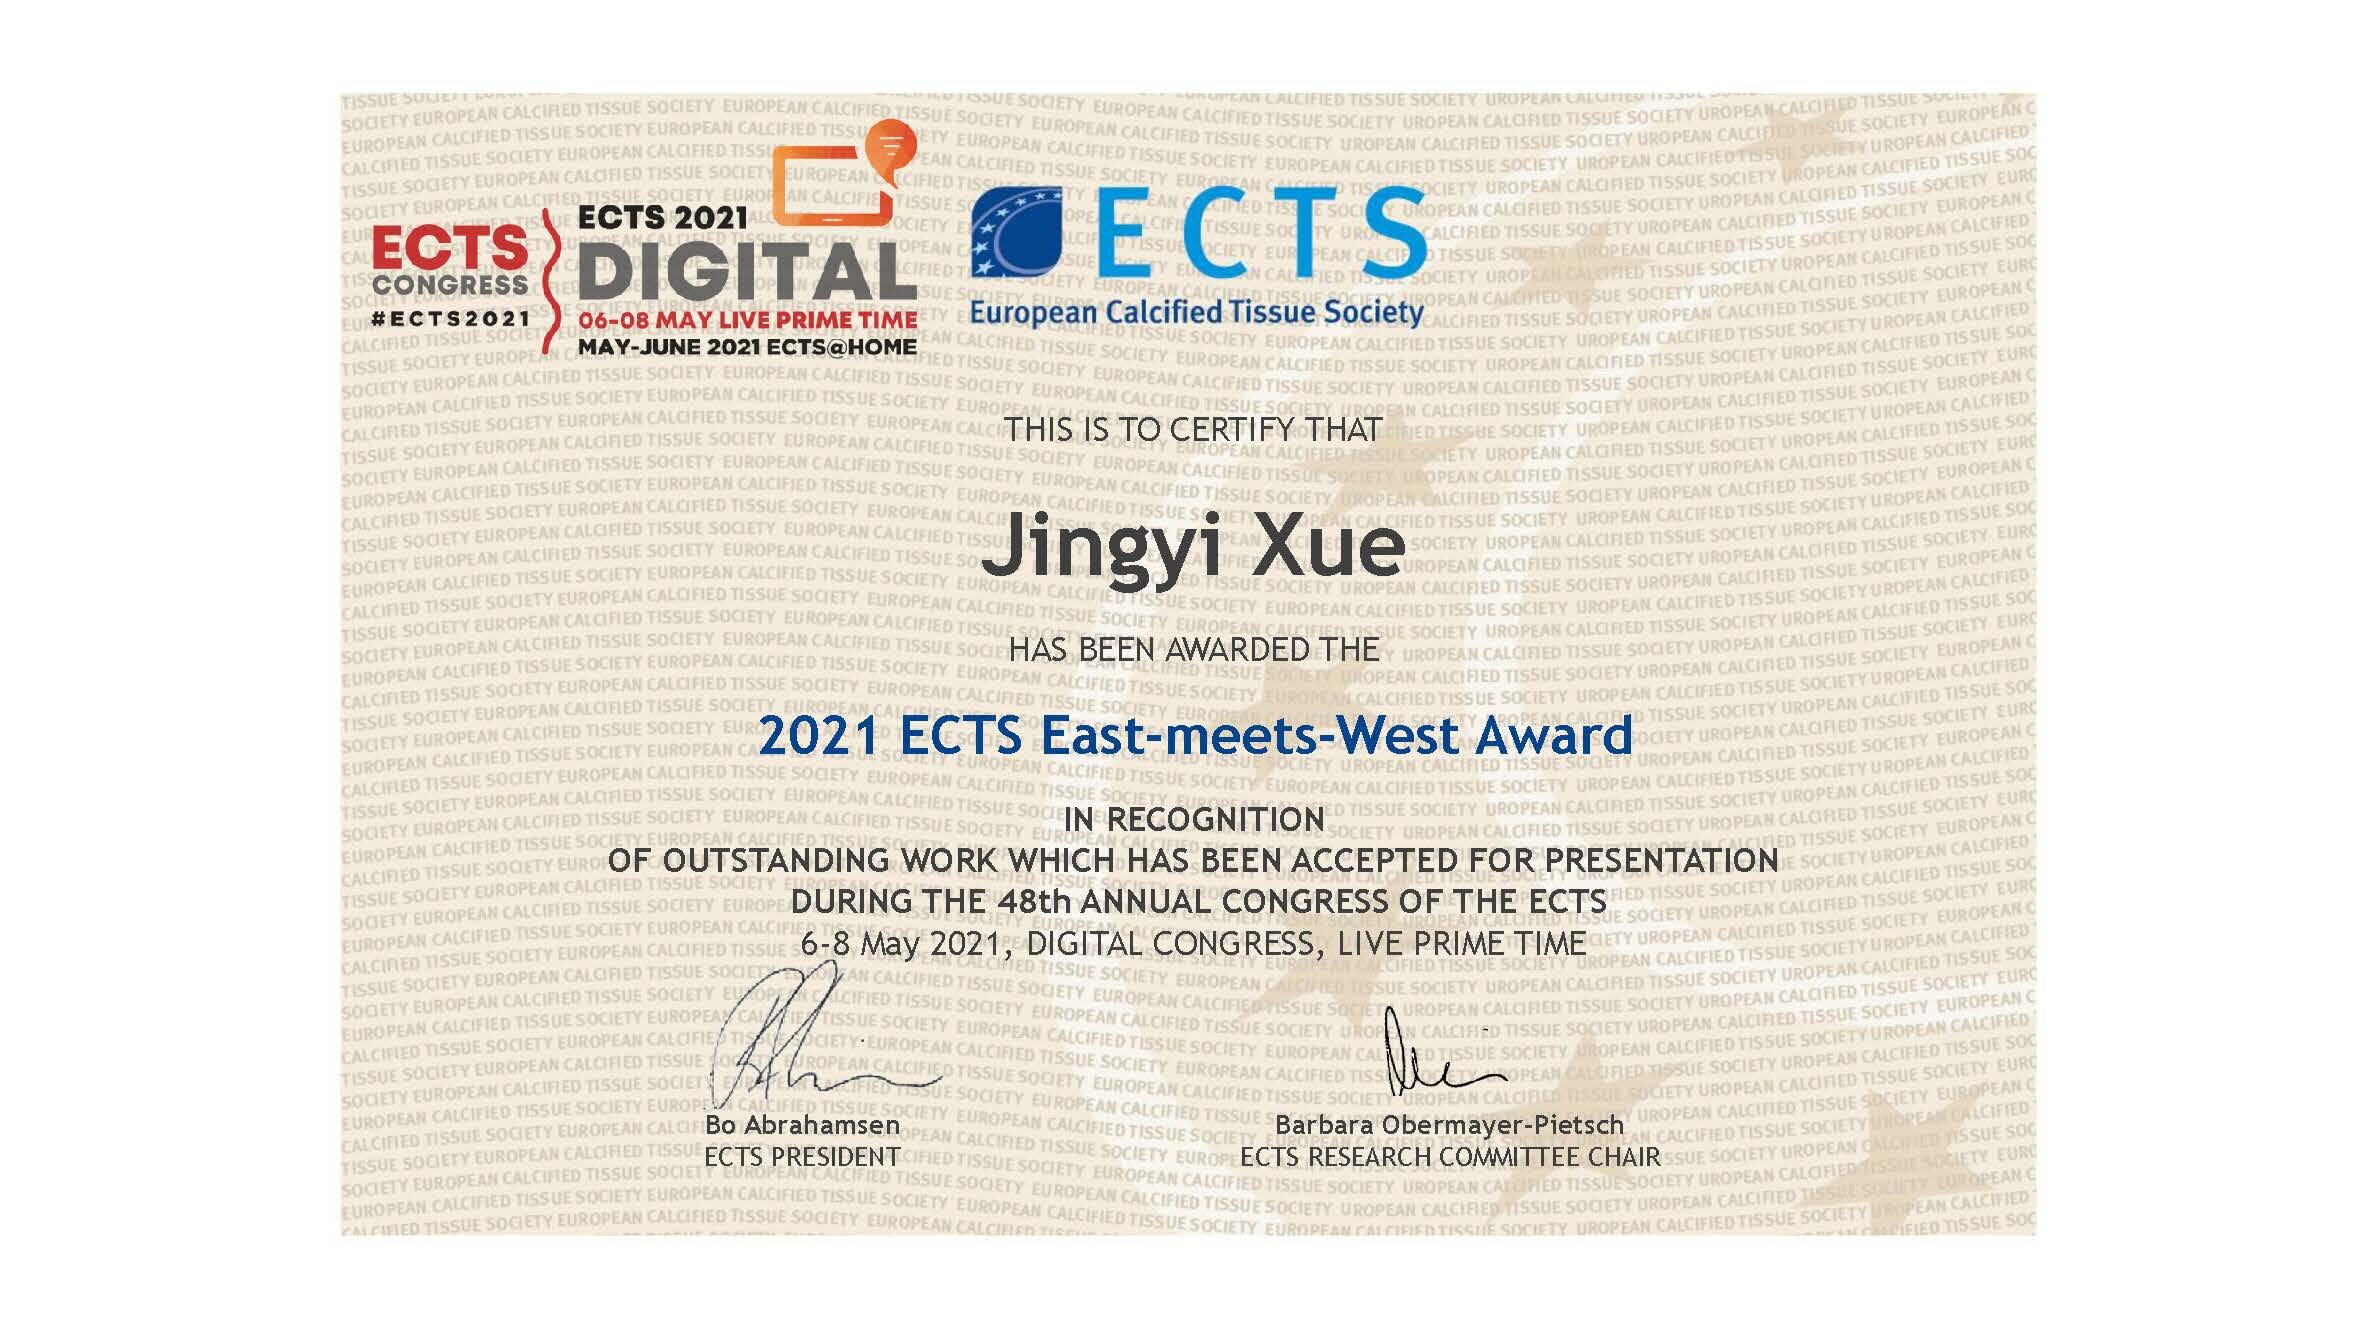 xue_ECTS East-meets-West CERTIFICATE Jingyi Xue.jpg